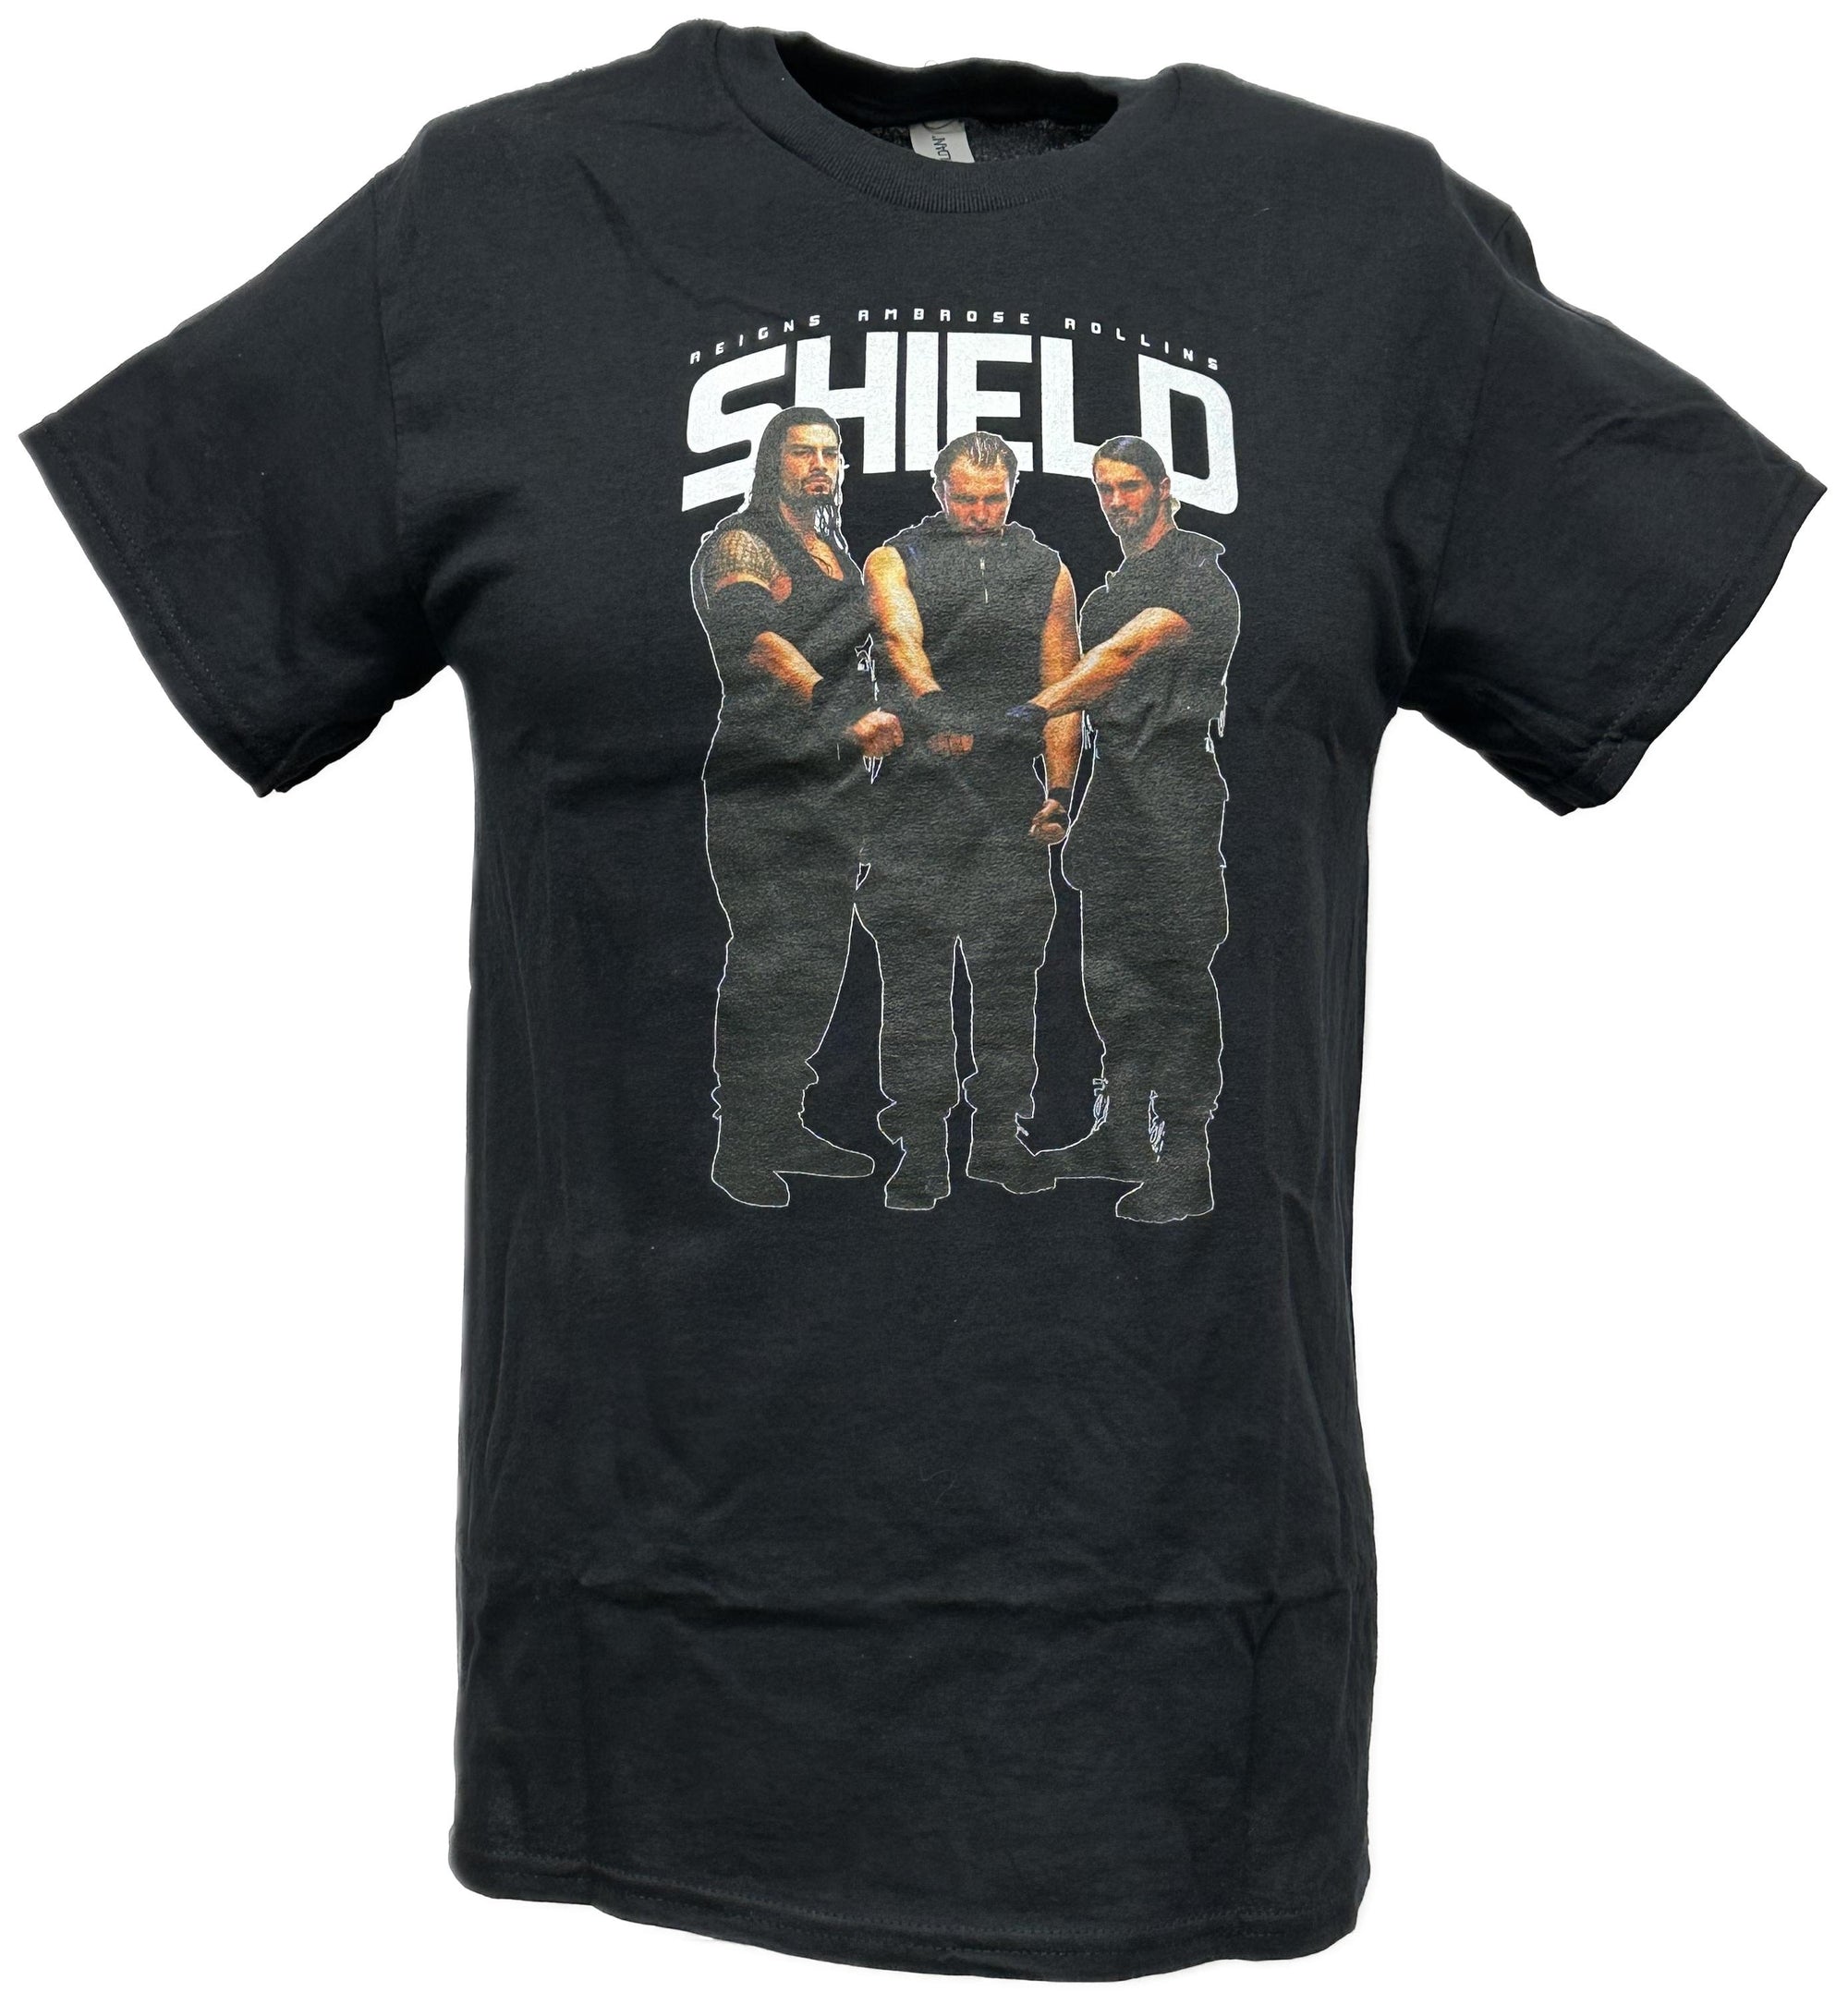 The Shield Roman Reigns Seth Rollins Dean Ambrose Kids Boys Youth Black T-shirt WWE